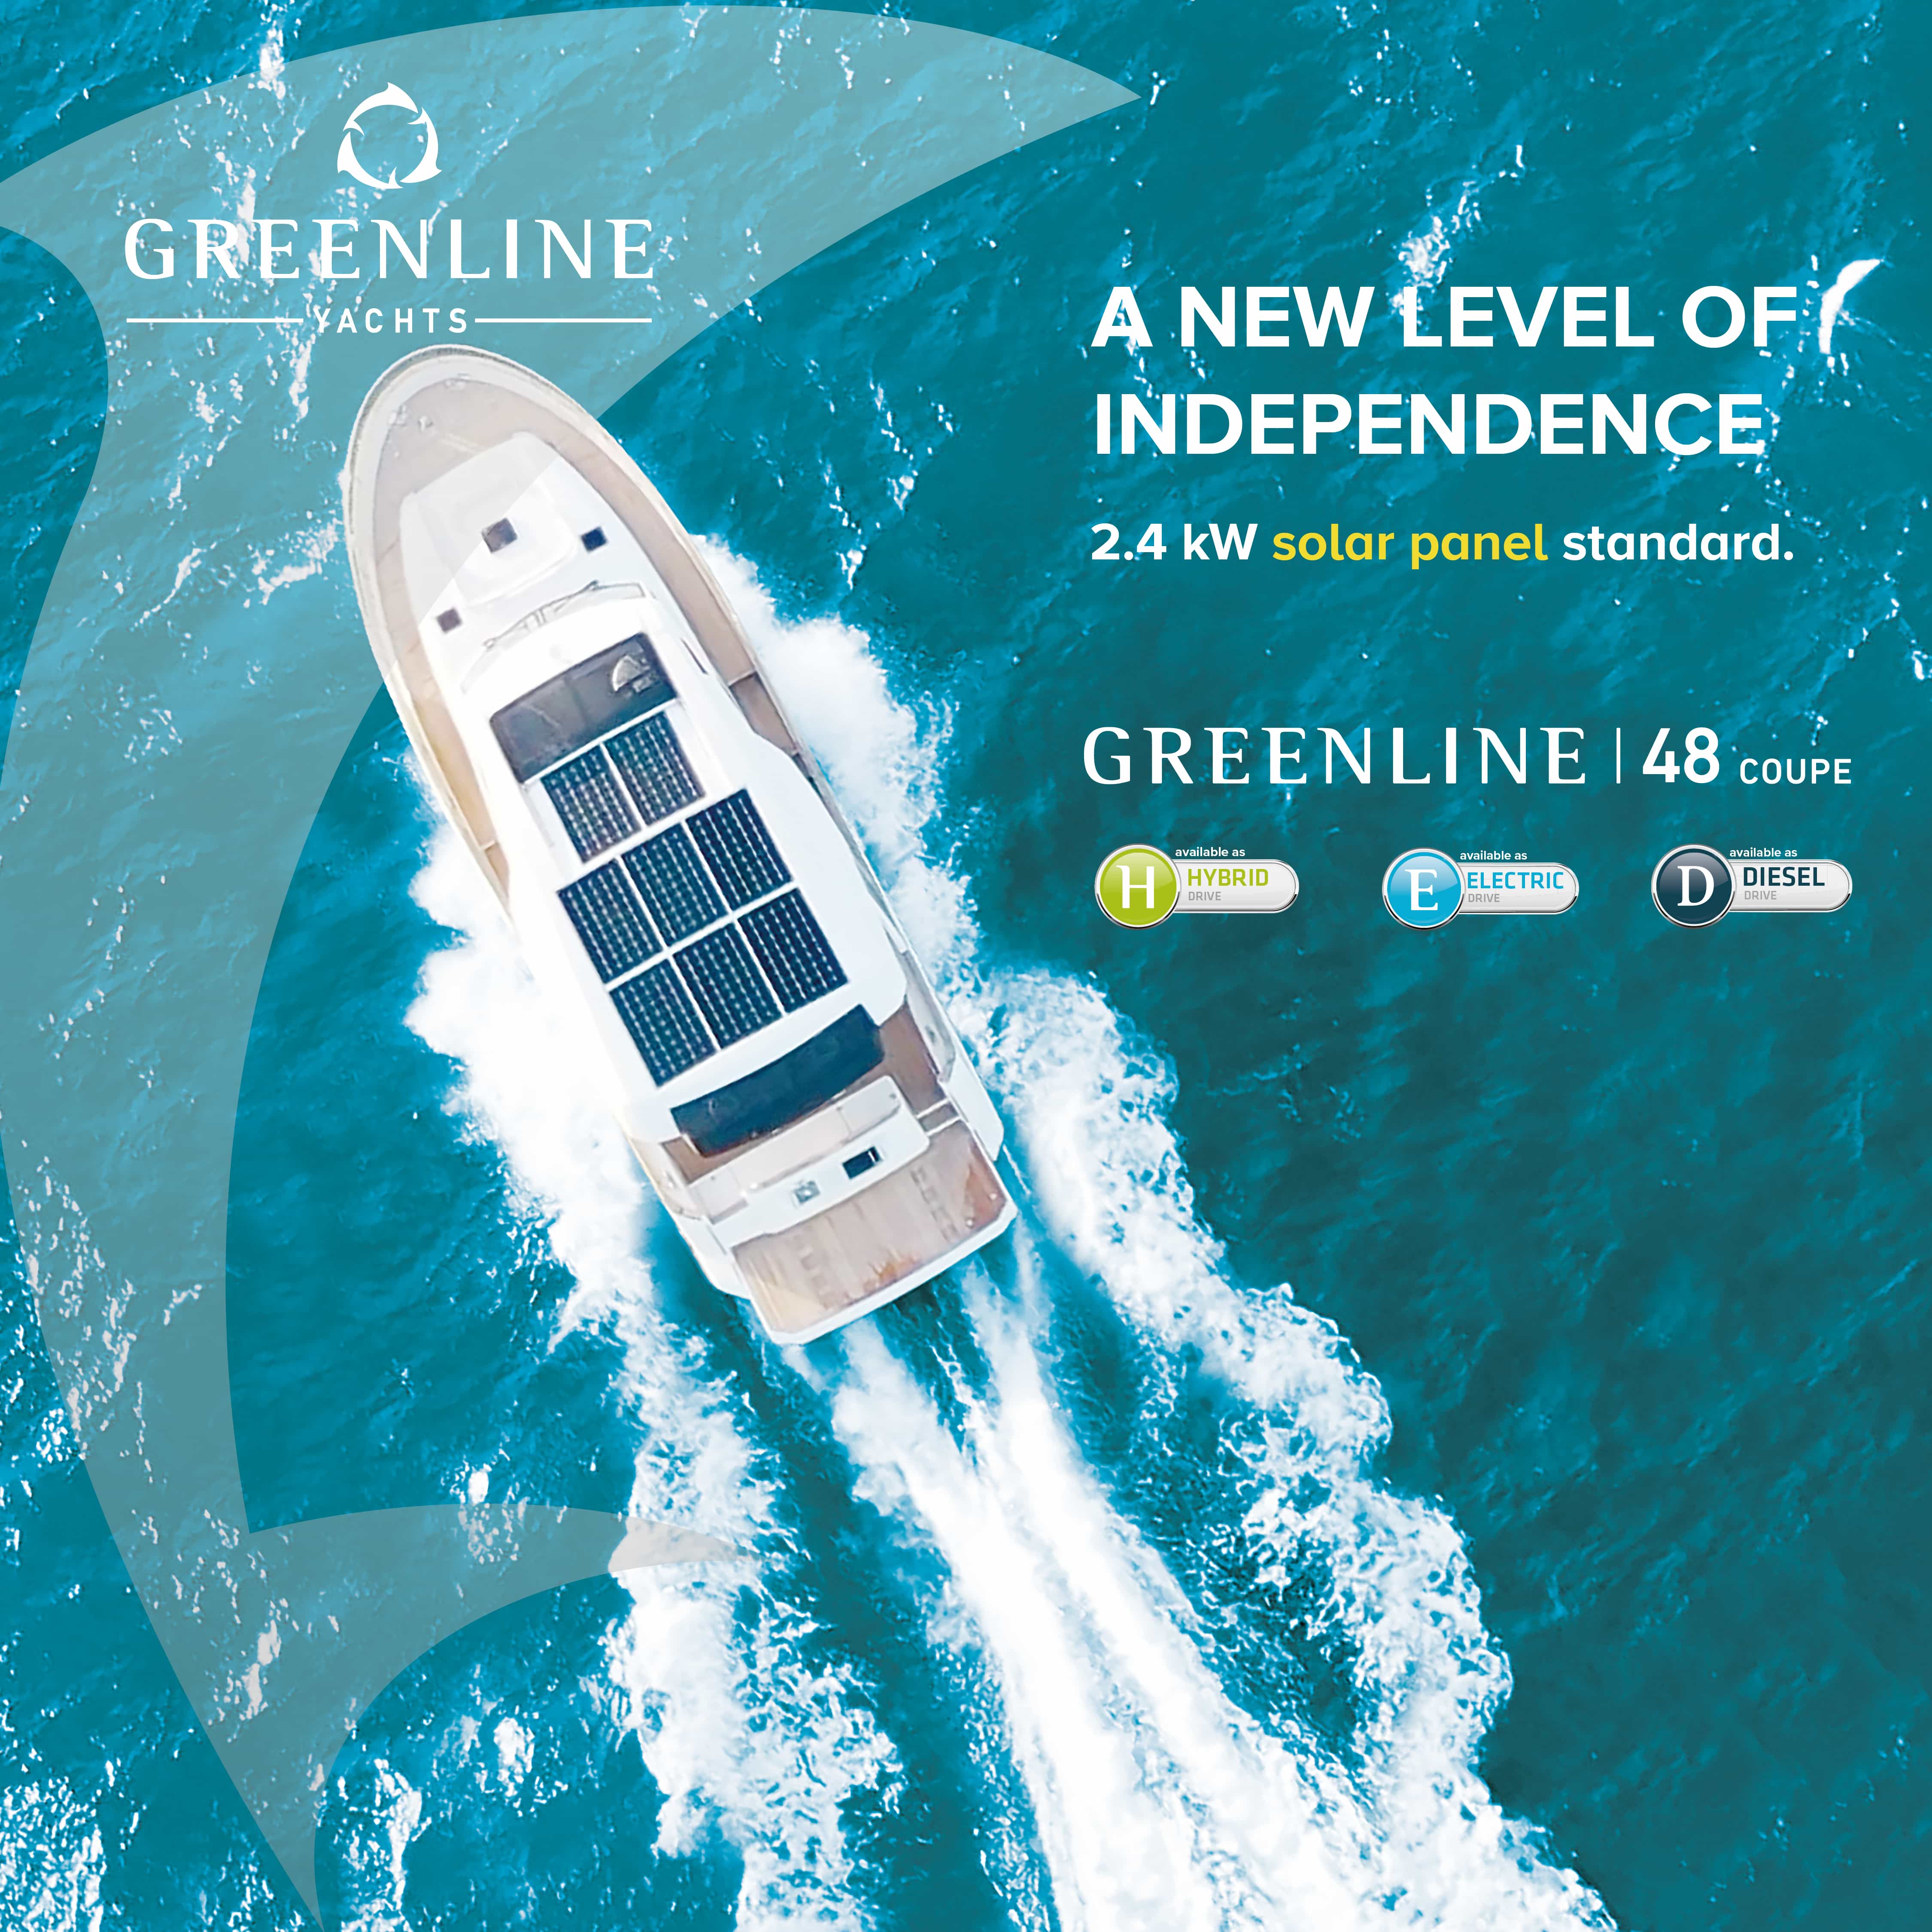 greenline yachts logo